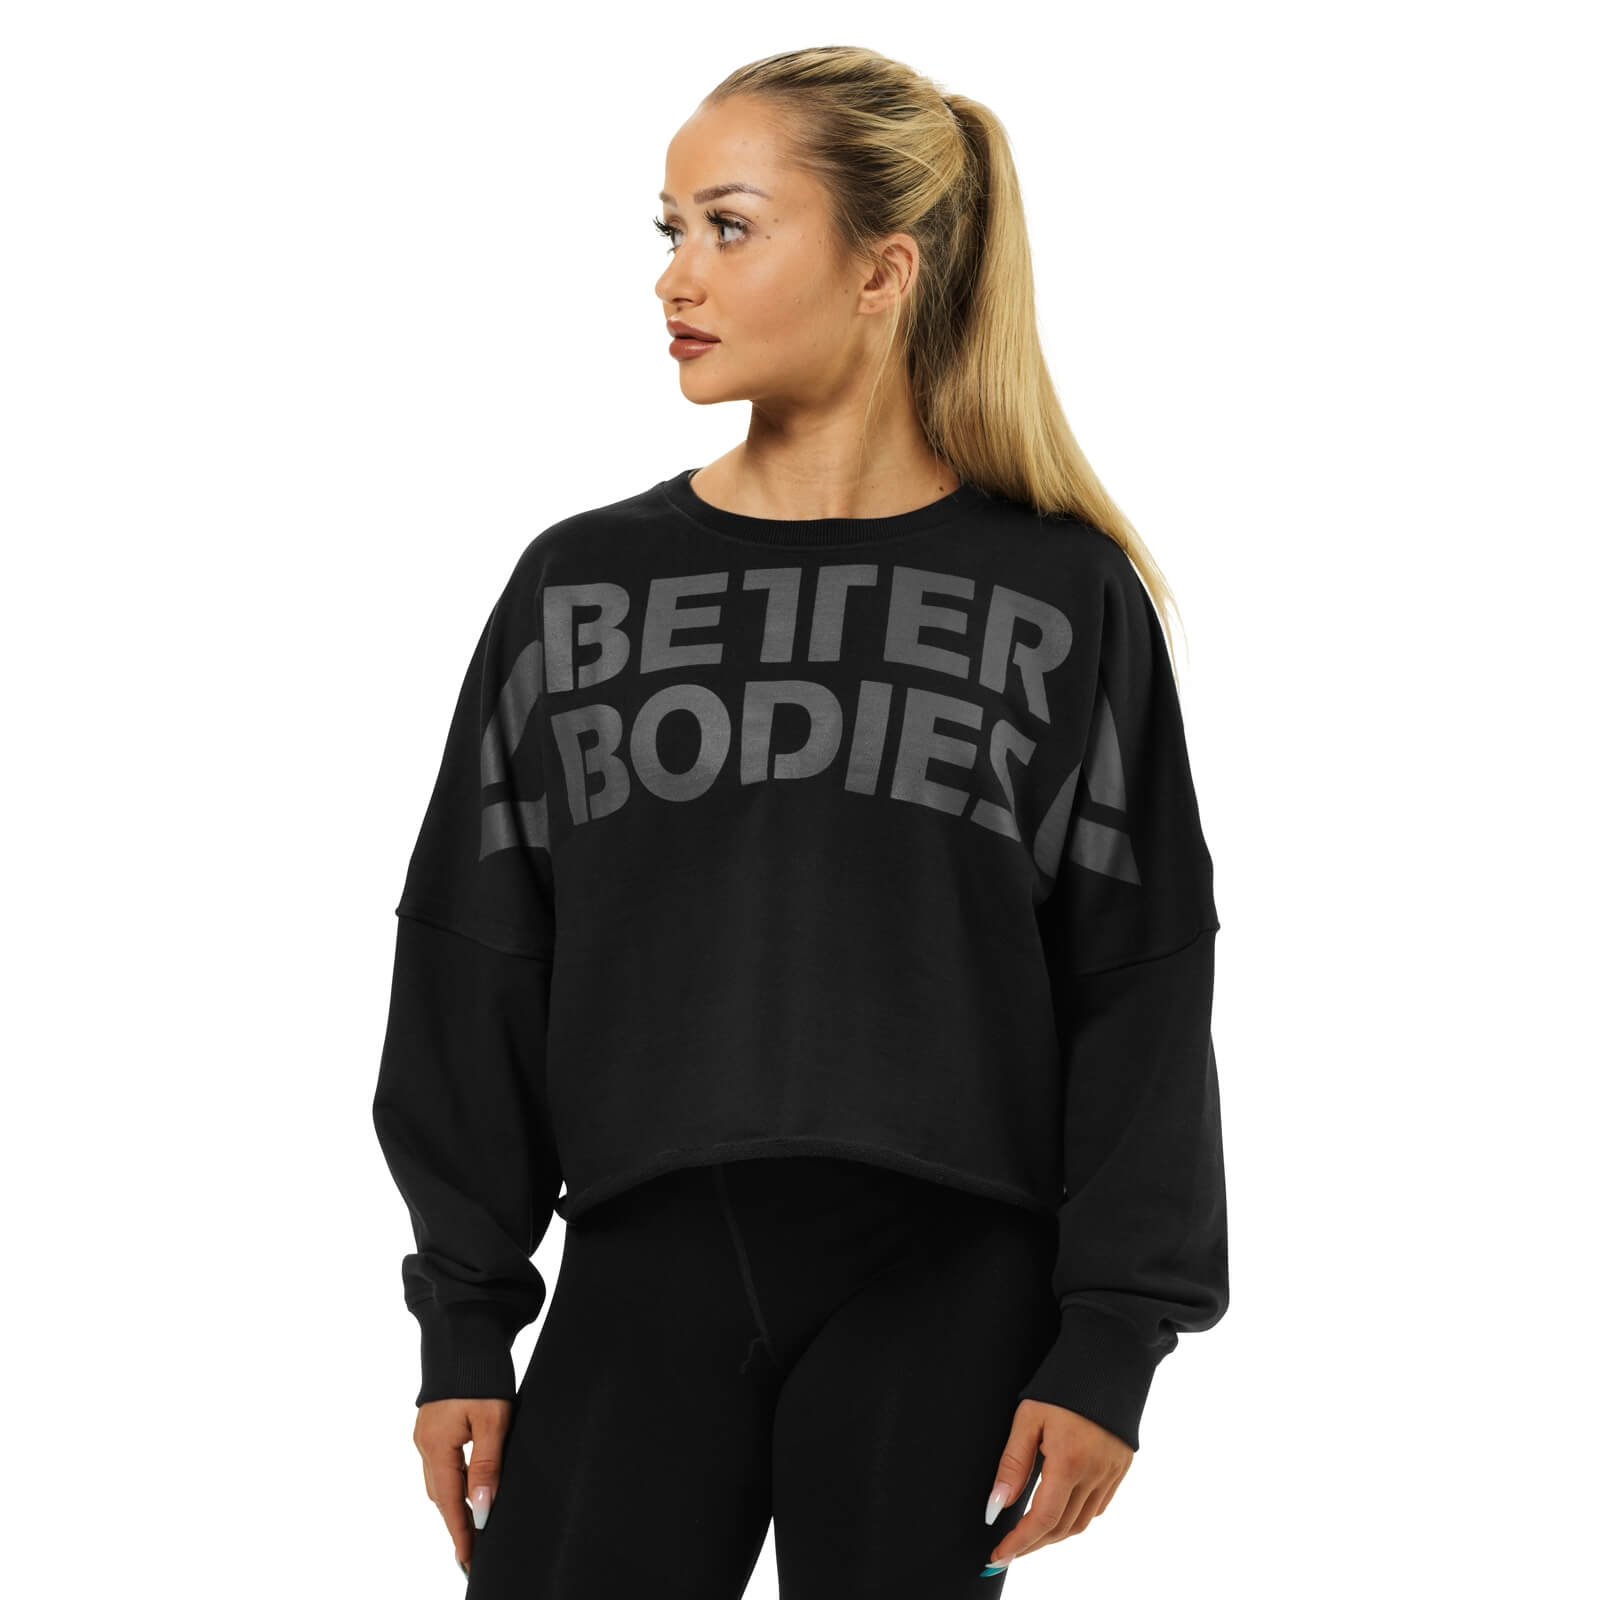 Sjekke Bowery Raw Sweater, black, Better Bodies hos SportGymButikken.no